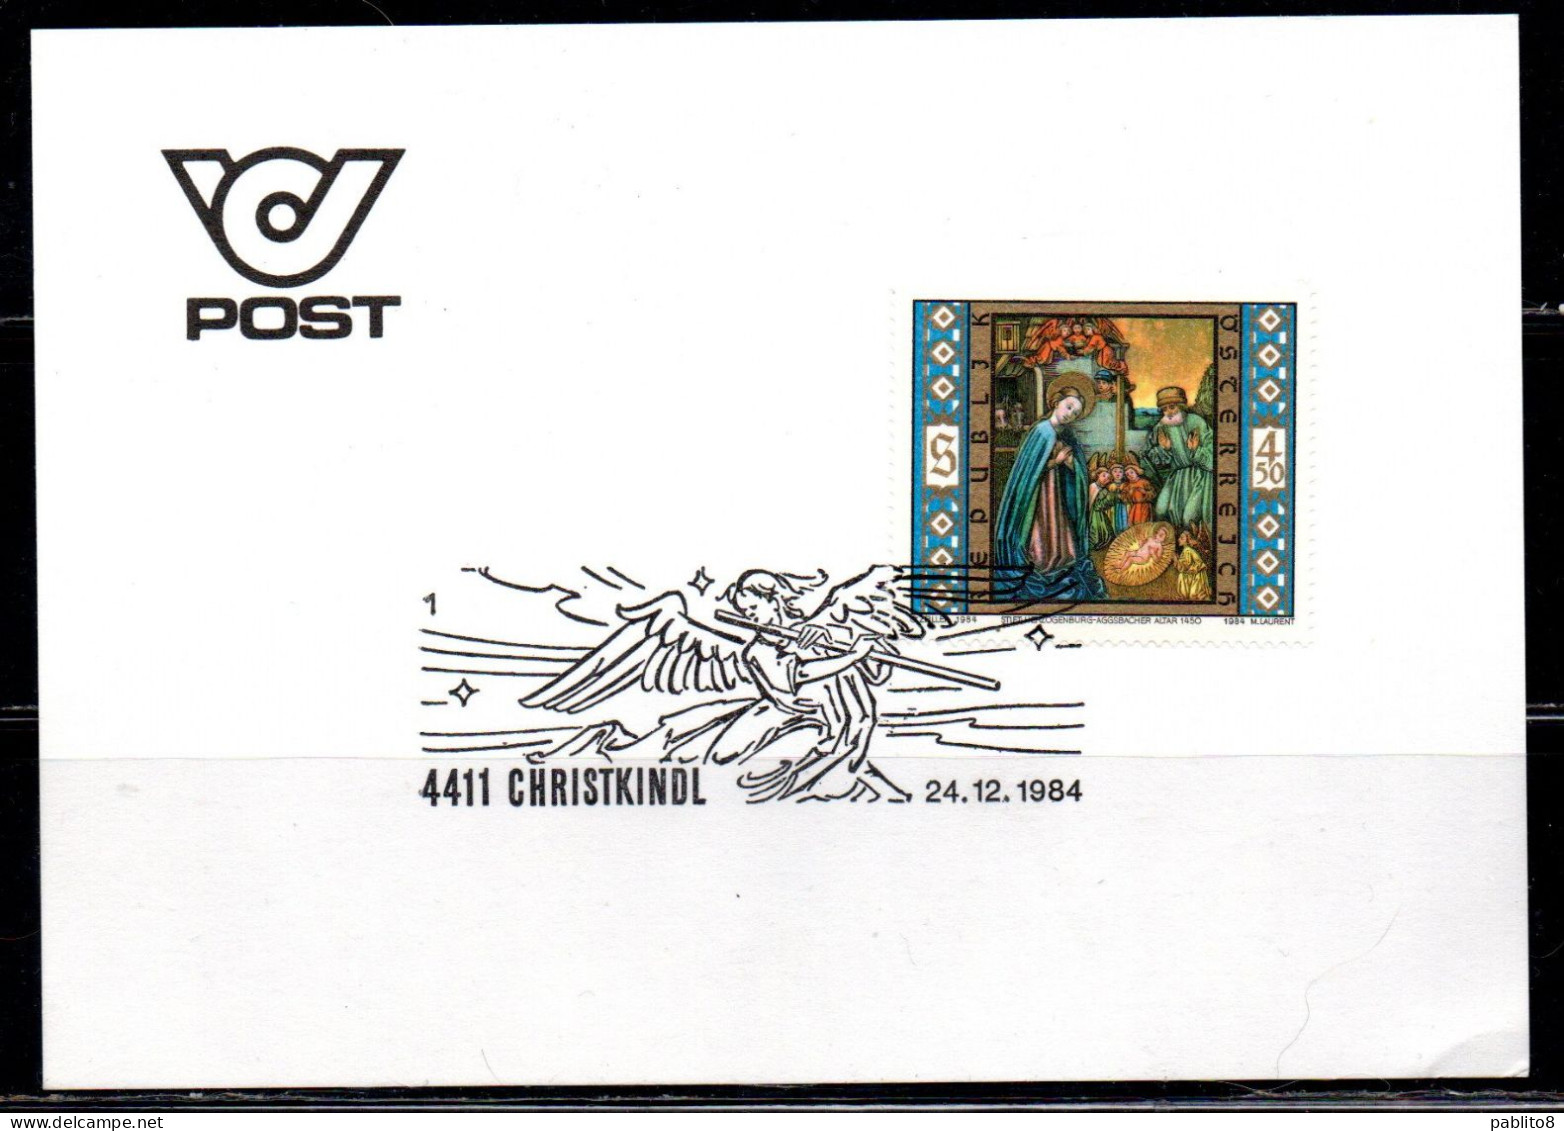 AUSTRIA ÖSTERREICH 24 12 1984 CHRISTMAS WEIHNACHTEN NATALE NOEL 4.50s FDC CARD KARTE CARTOLINA ENTIRE SPECIAL CANCEL - Cartes Postales